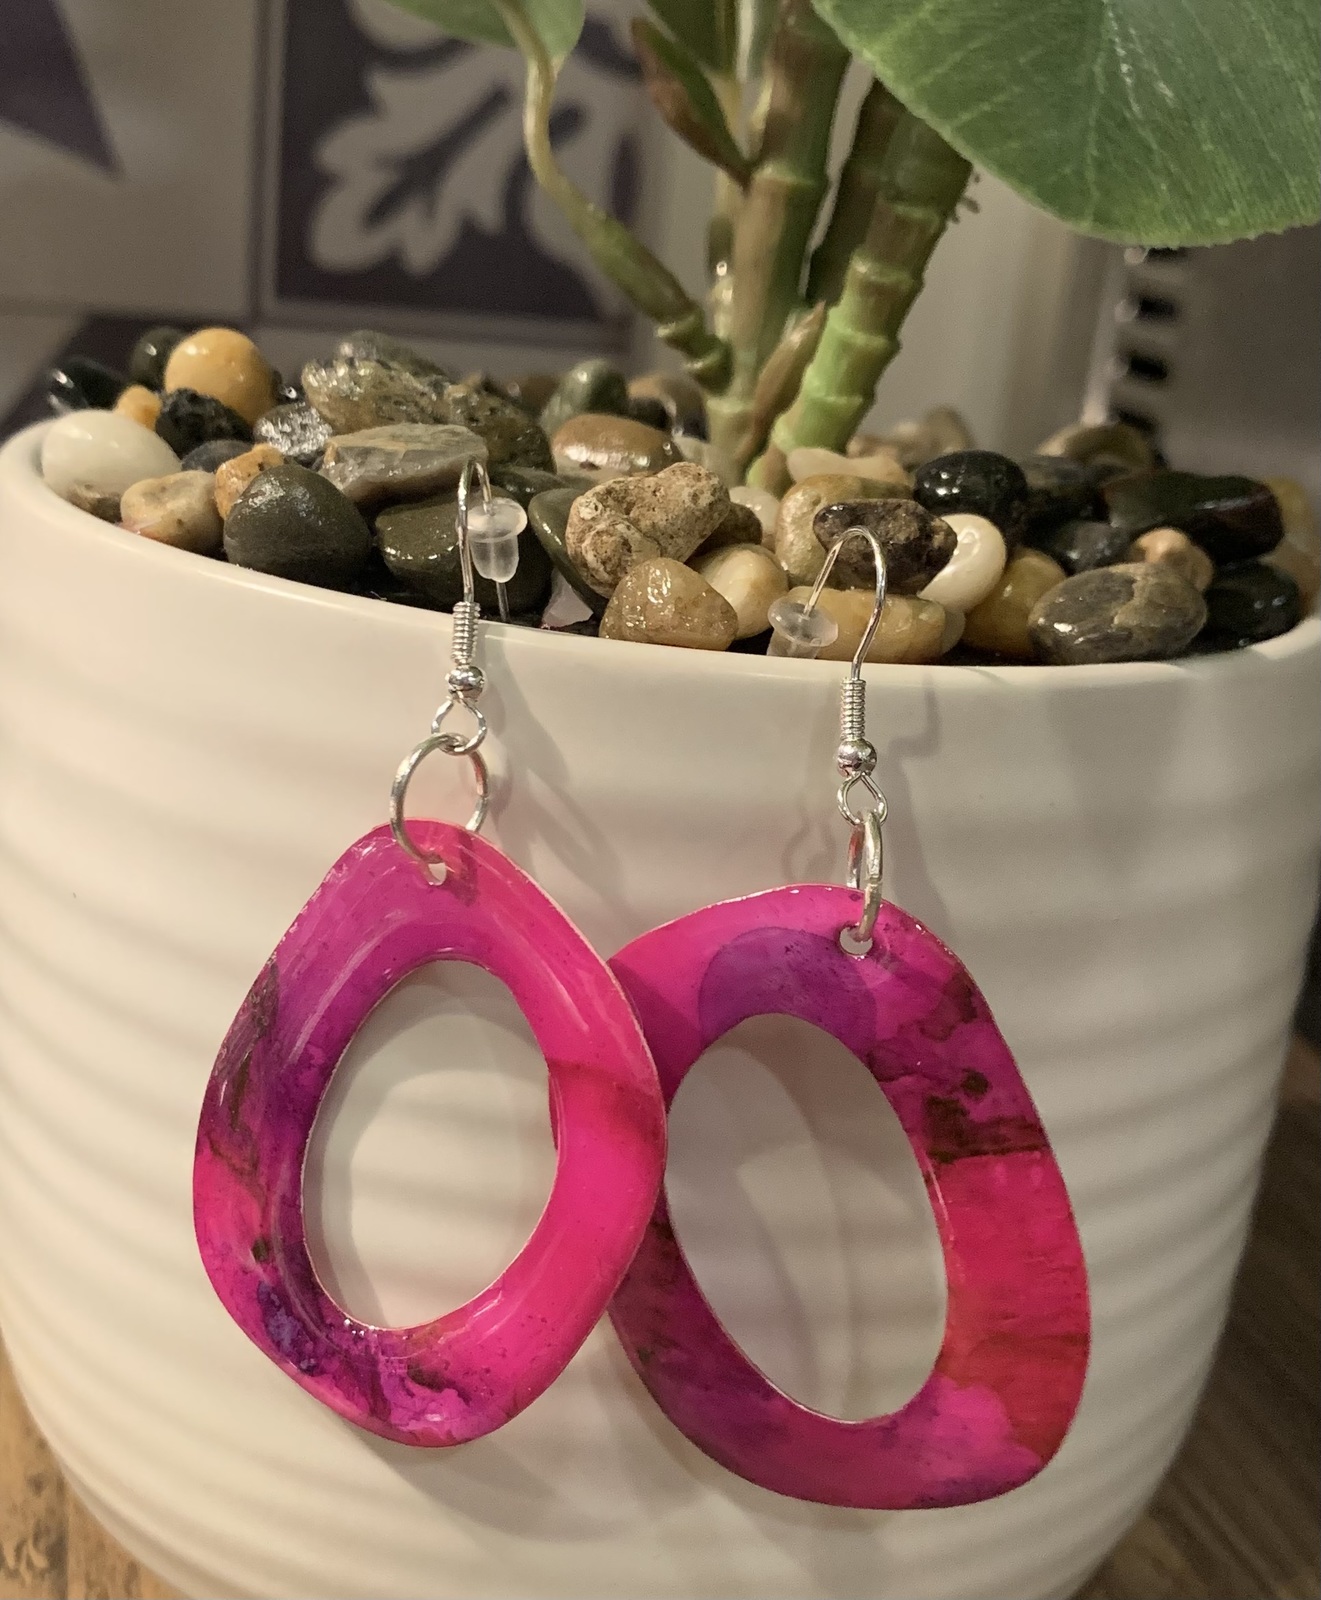 Pink Handmade Resin Earrings - $12.00